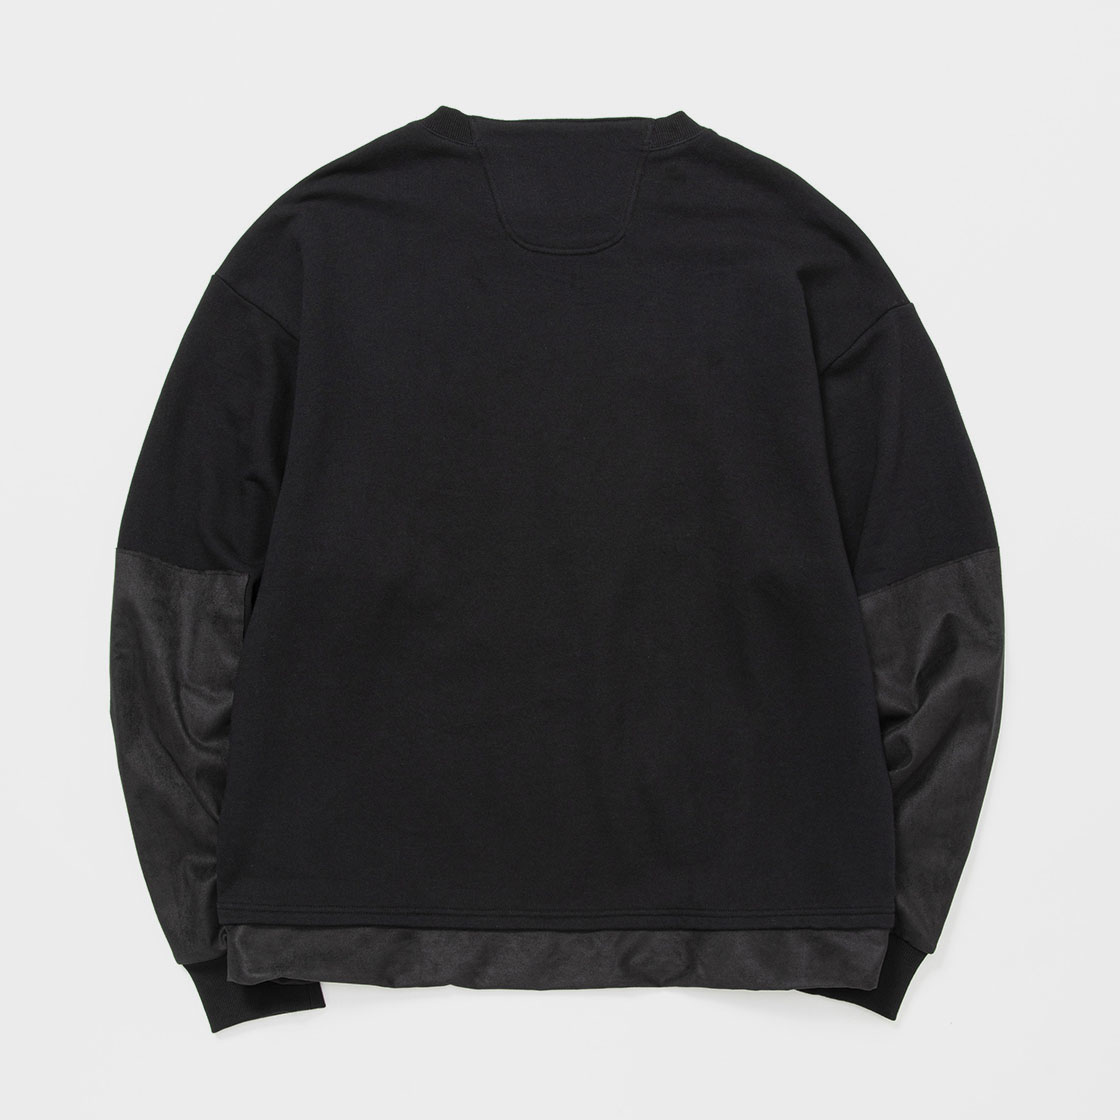 Imitation Suede Sweatshirt / Black